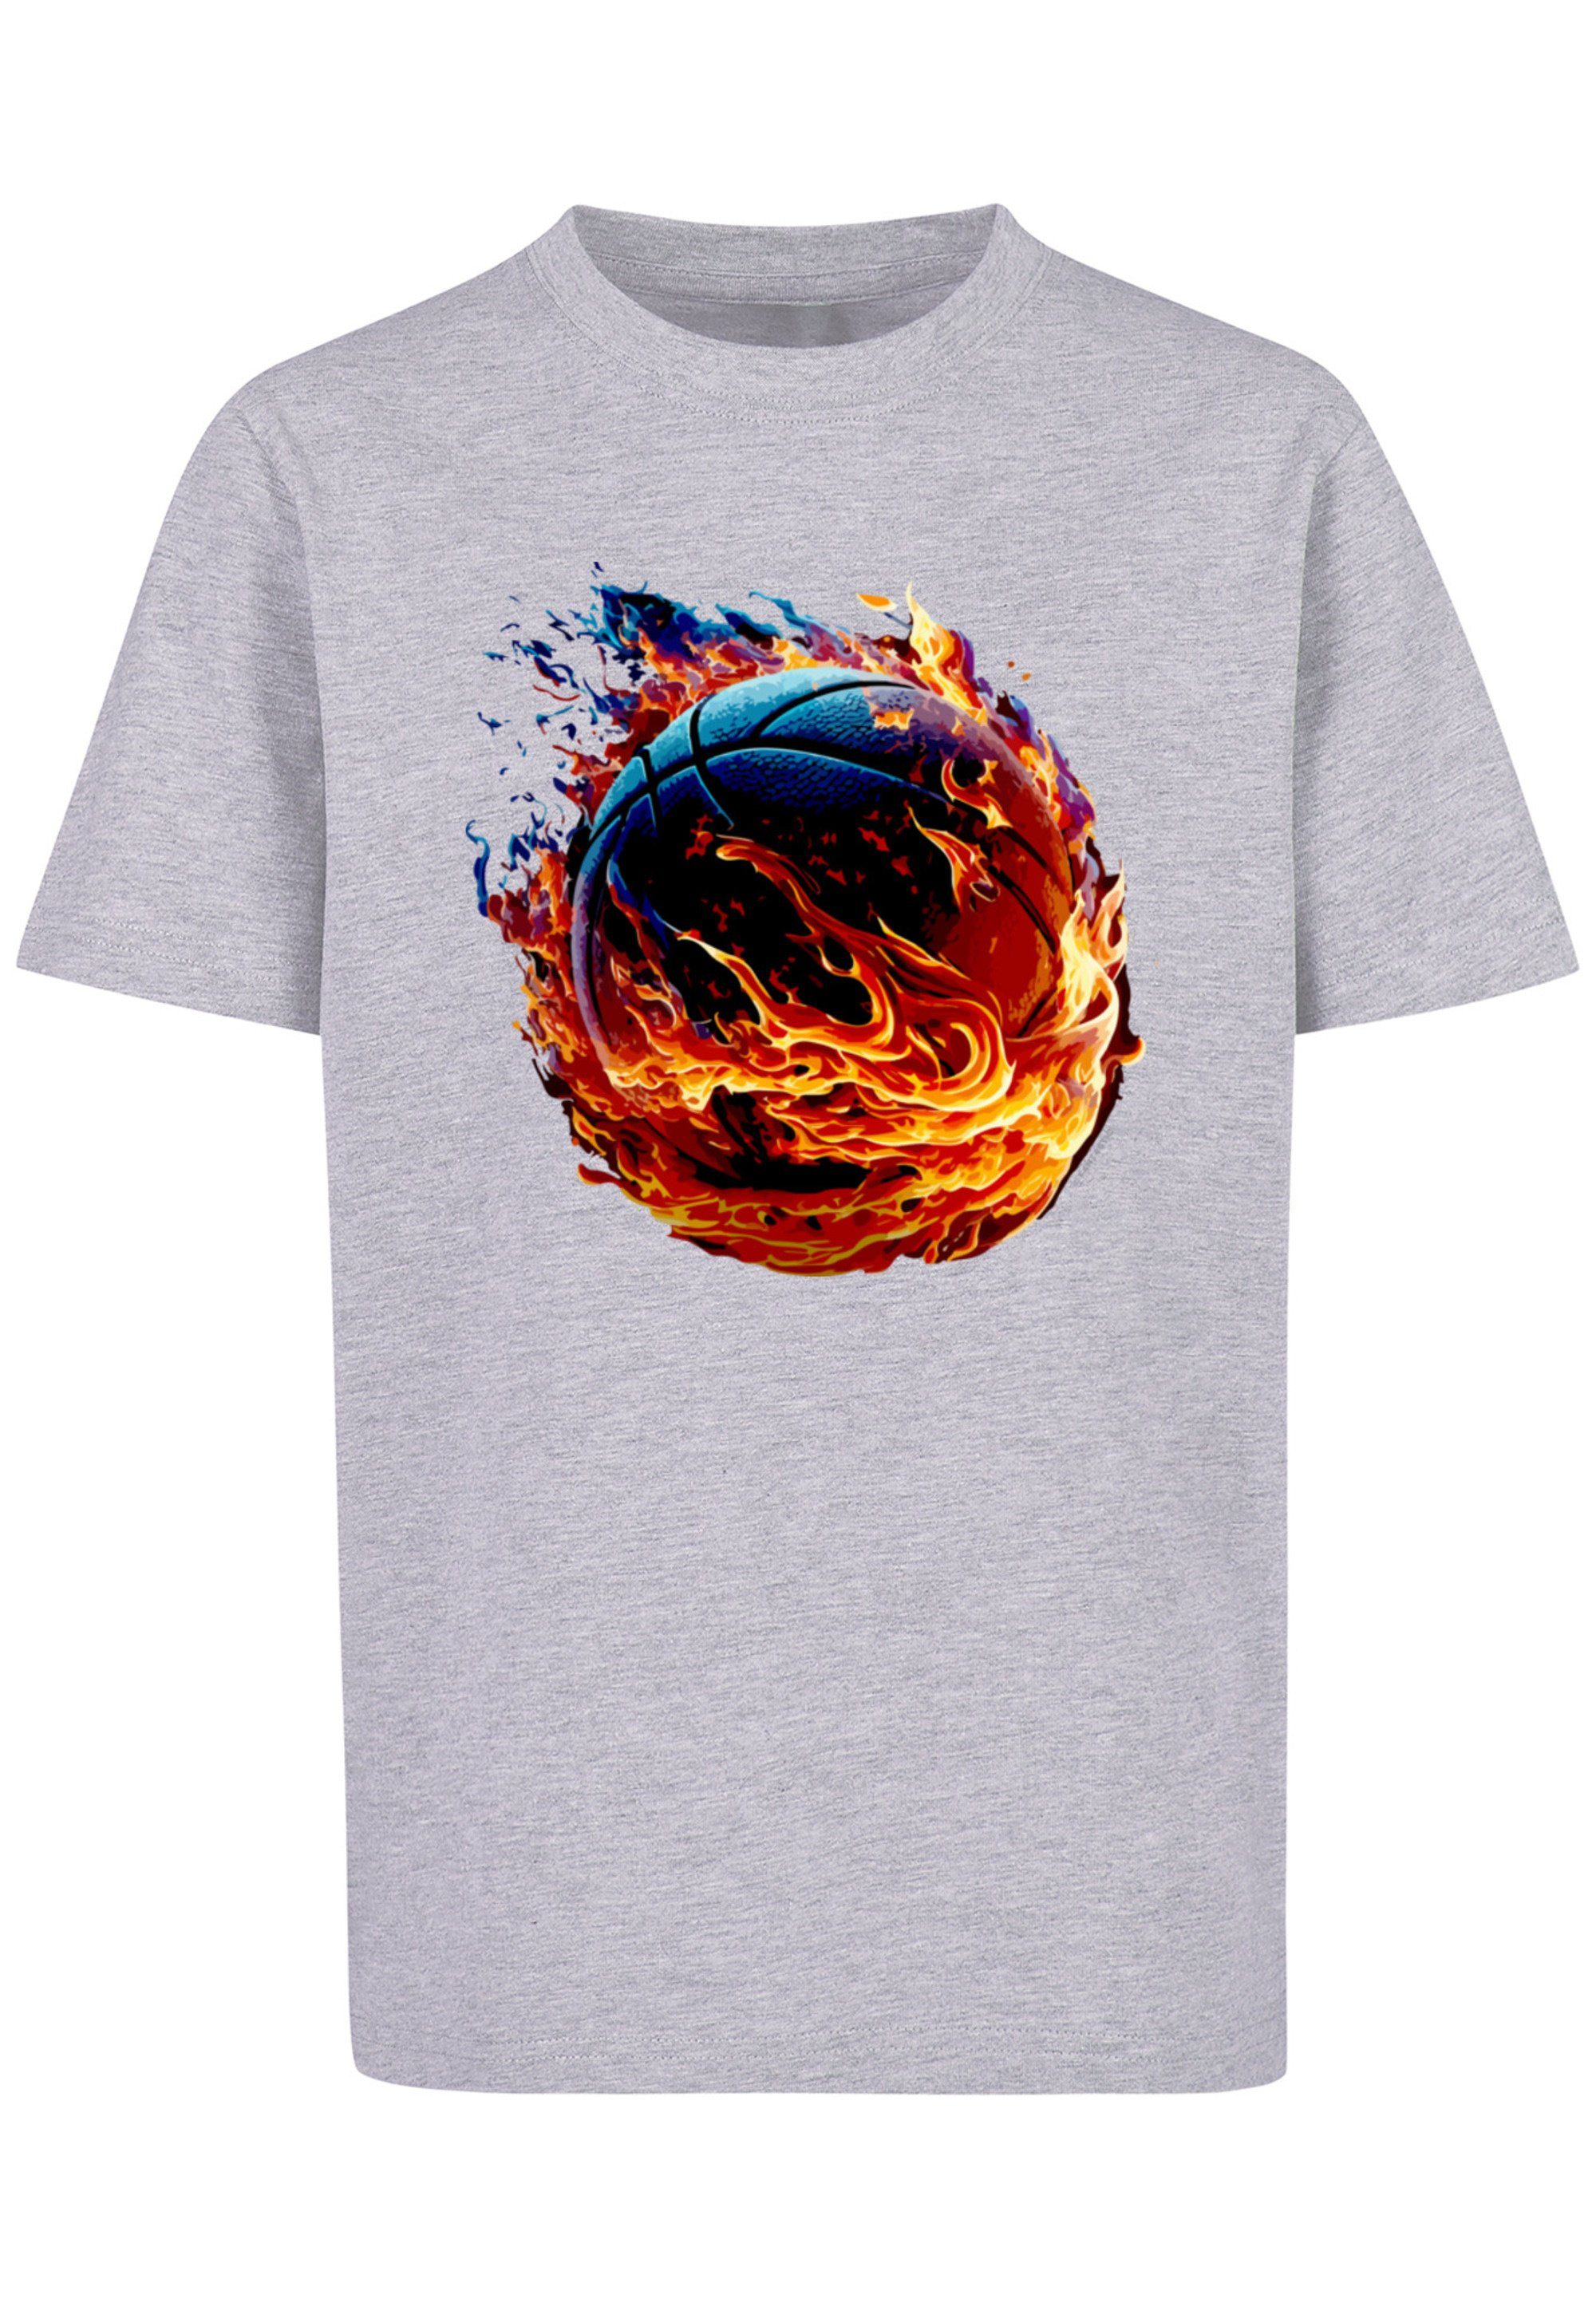 heather Fire grey Sport Basketball UNISEX T-Shirt Print On F4NT4STIC